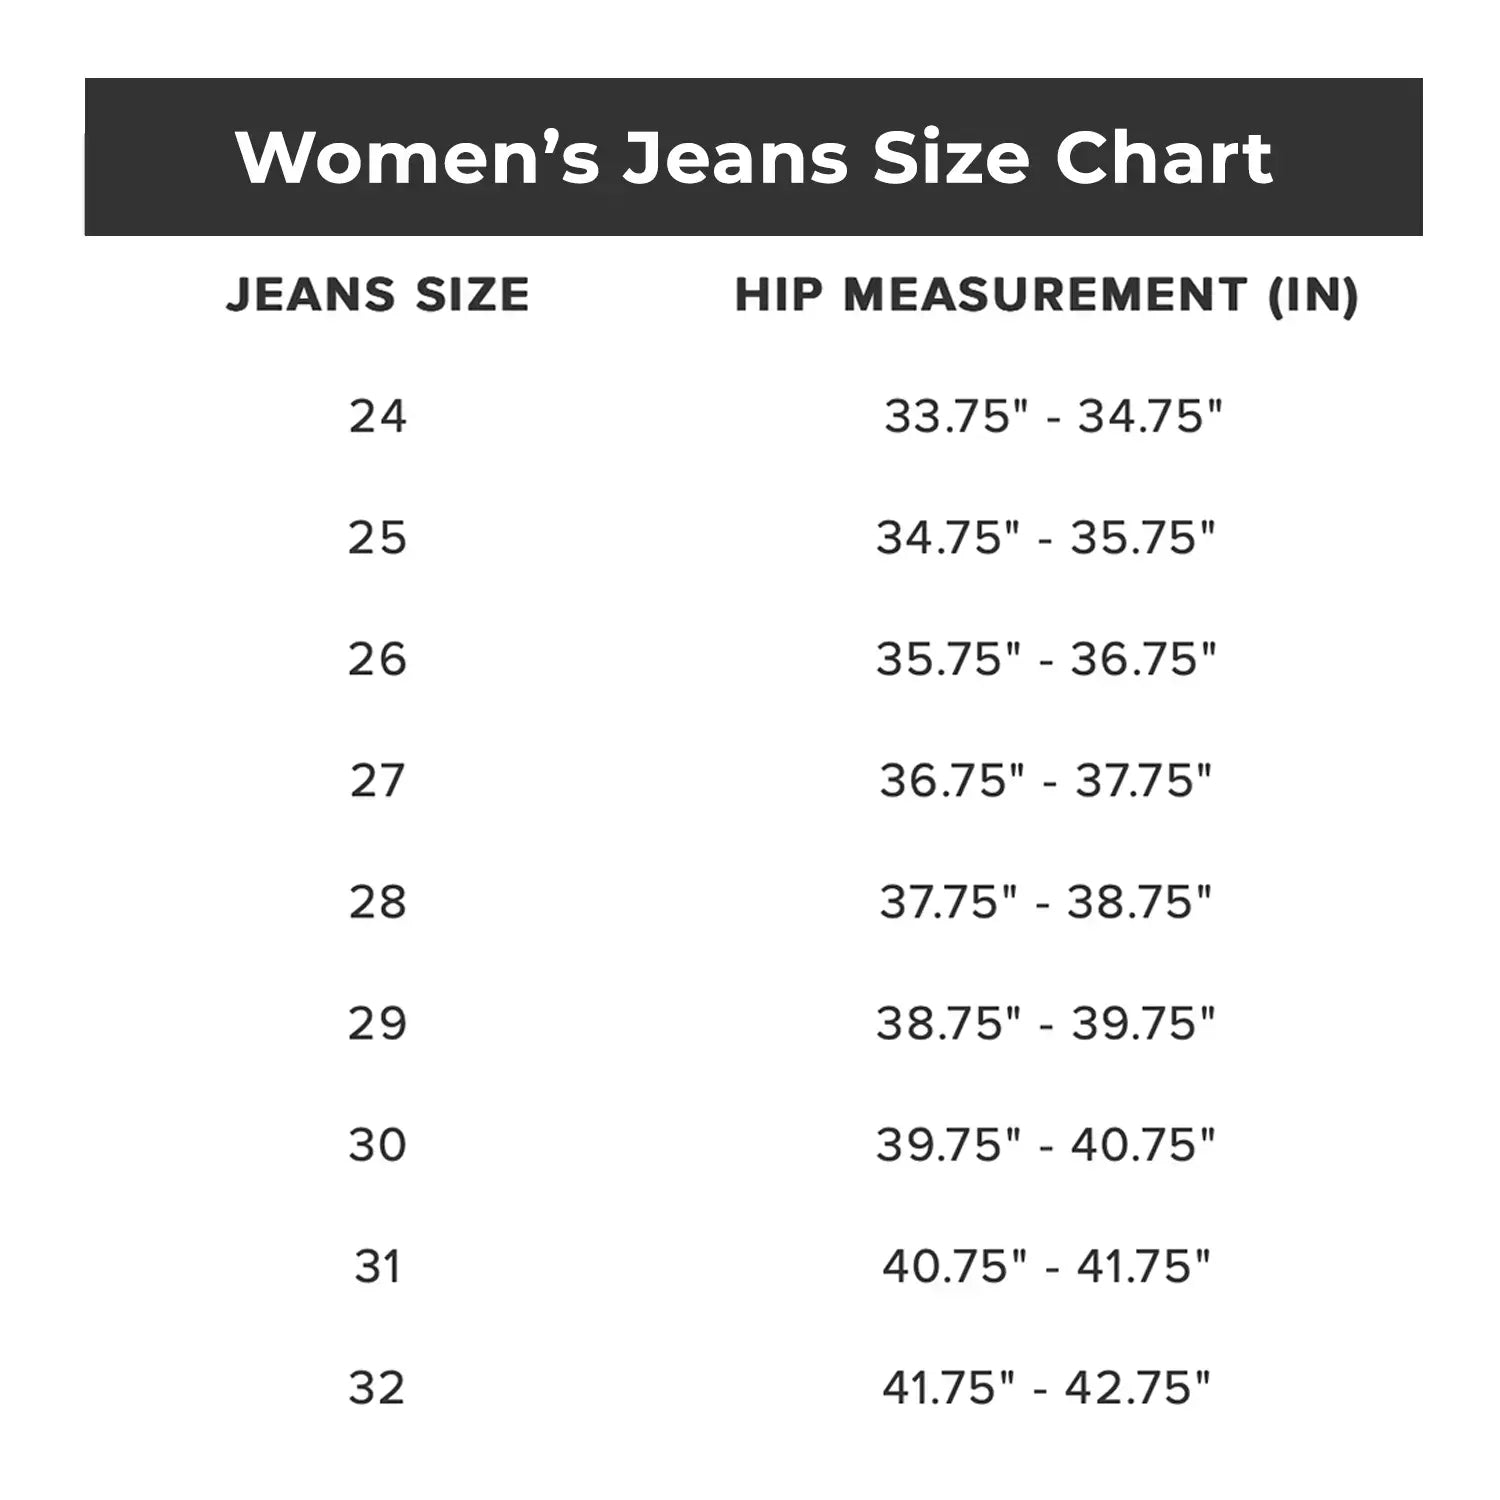 Jean size chart for women